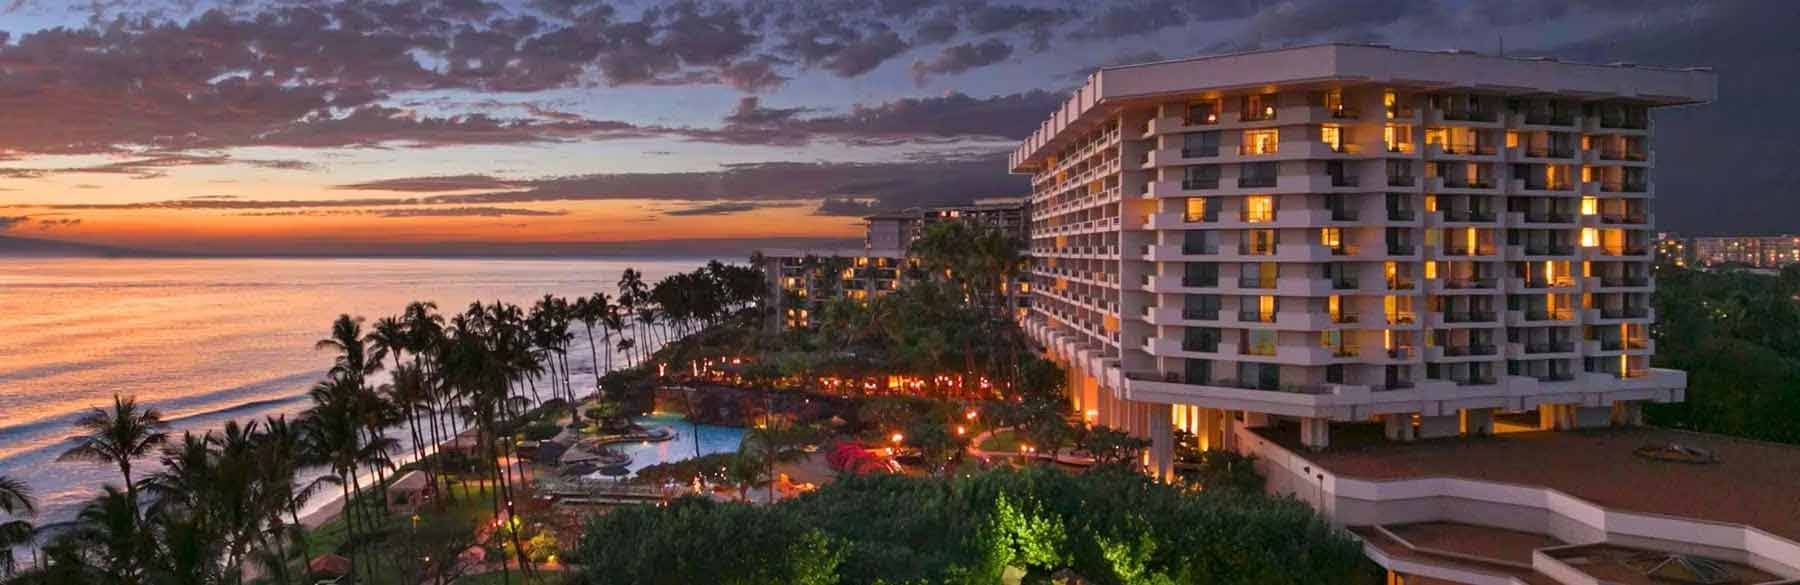 Four Seasons Resort Hualalai, Island of Hawaii